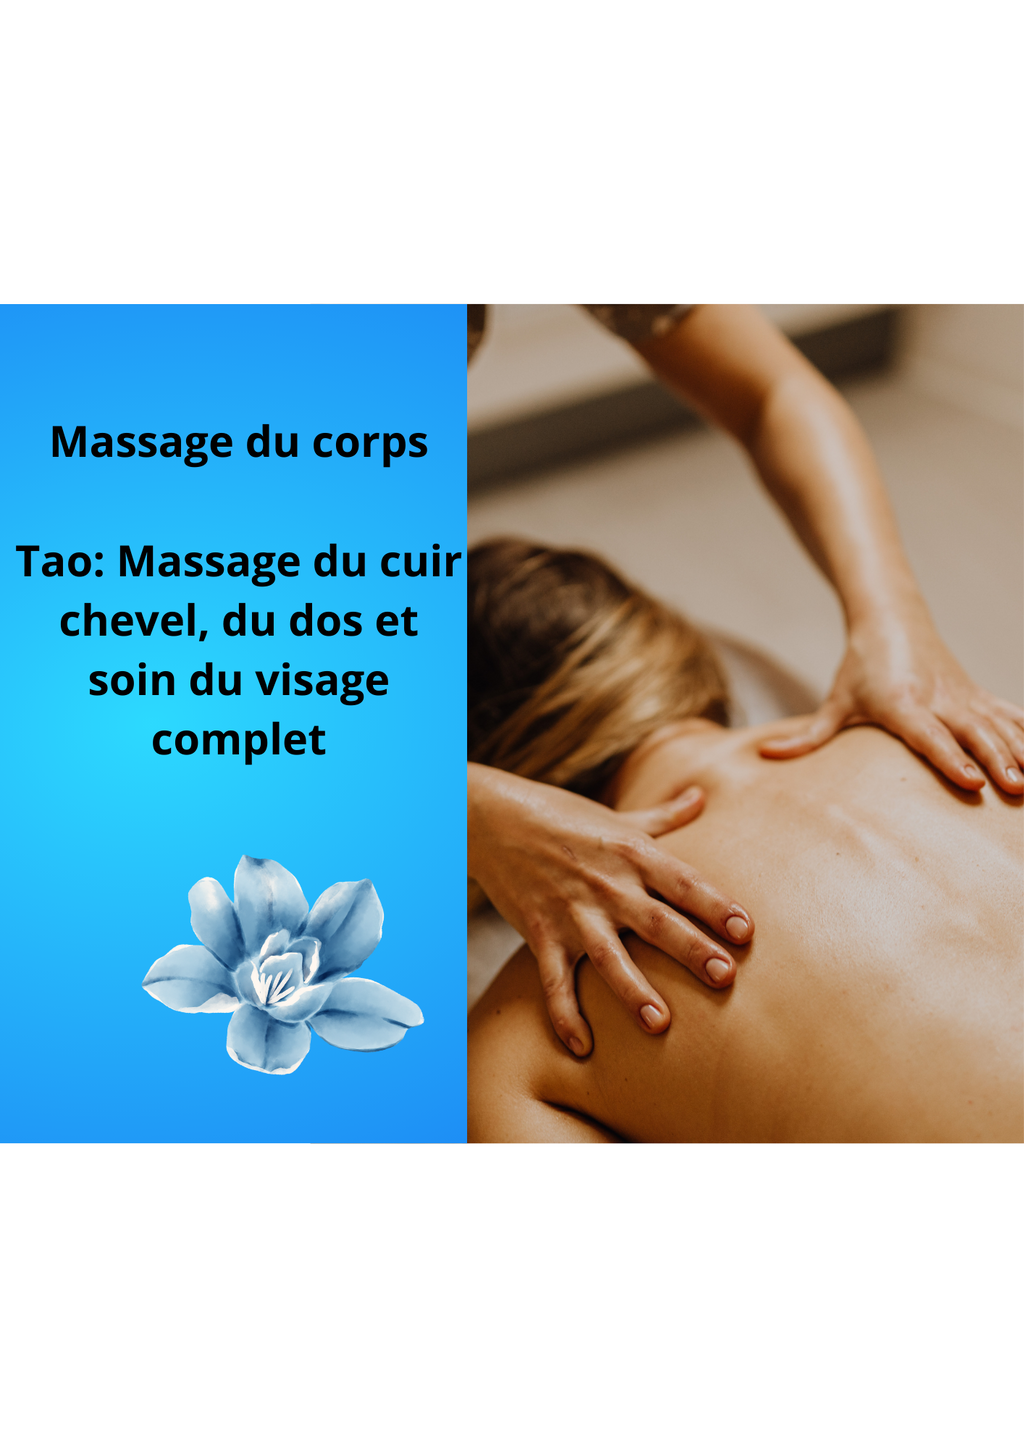 Massage Tao : Massage du cuir chevelu, du dos et soin du visage complet